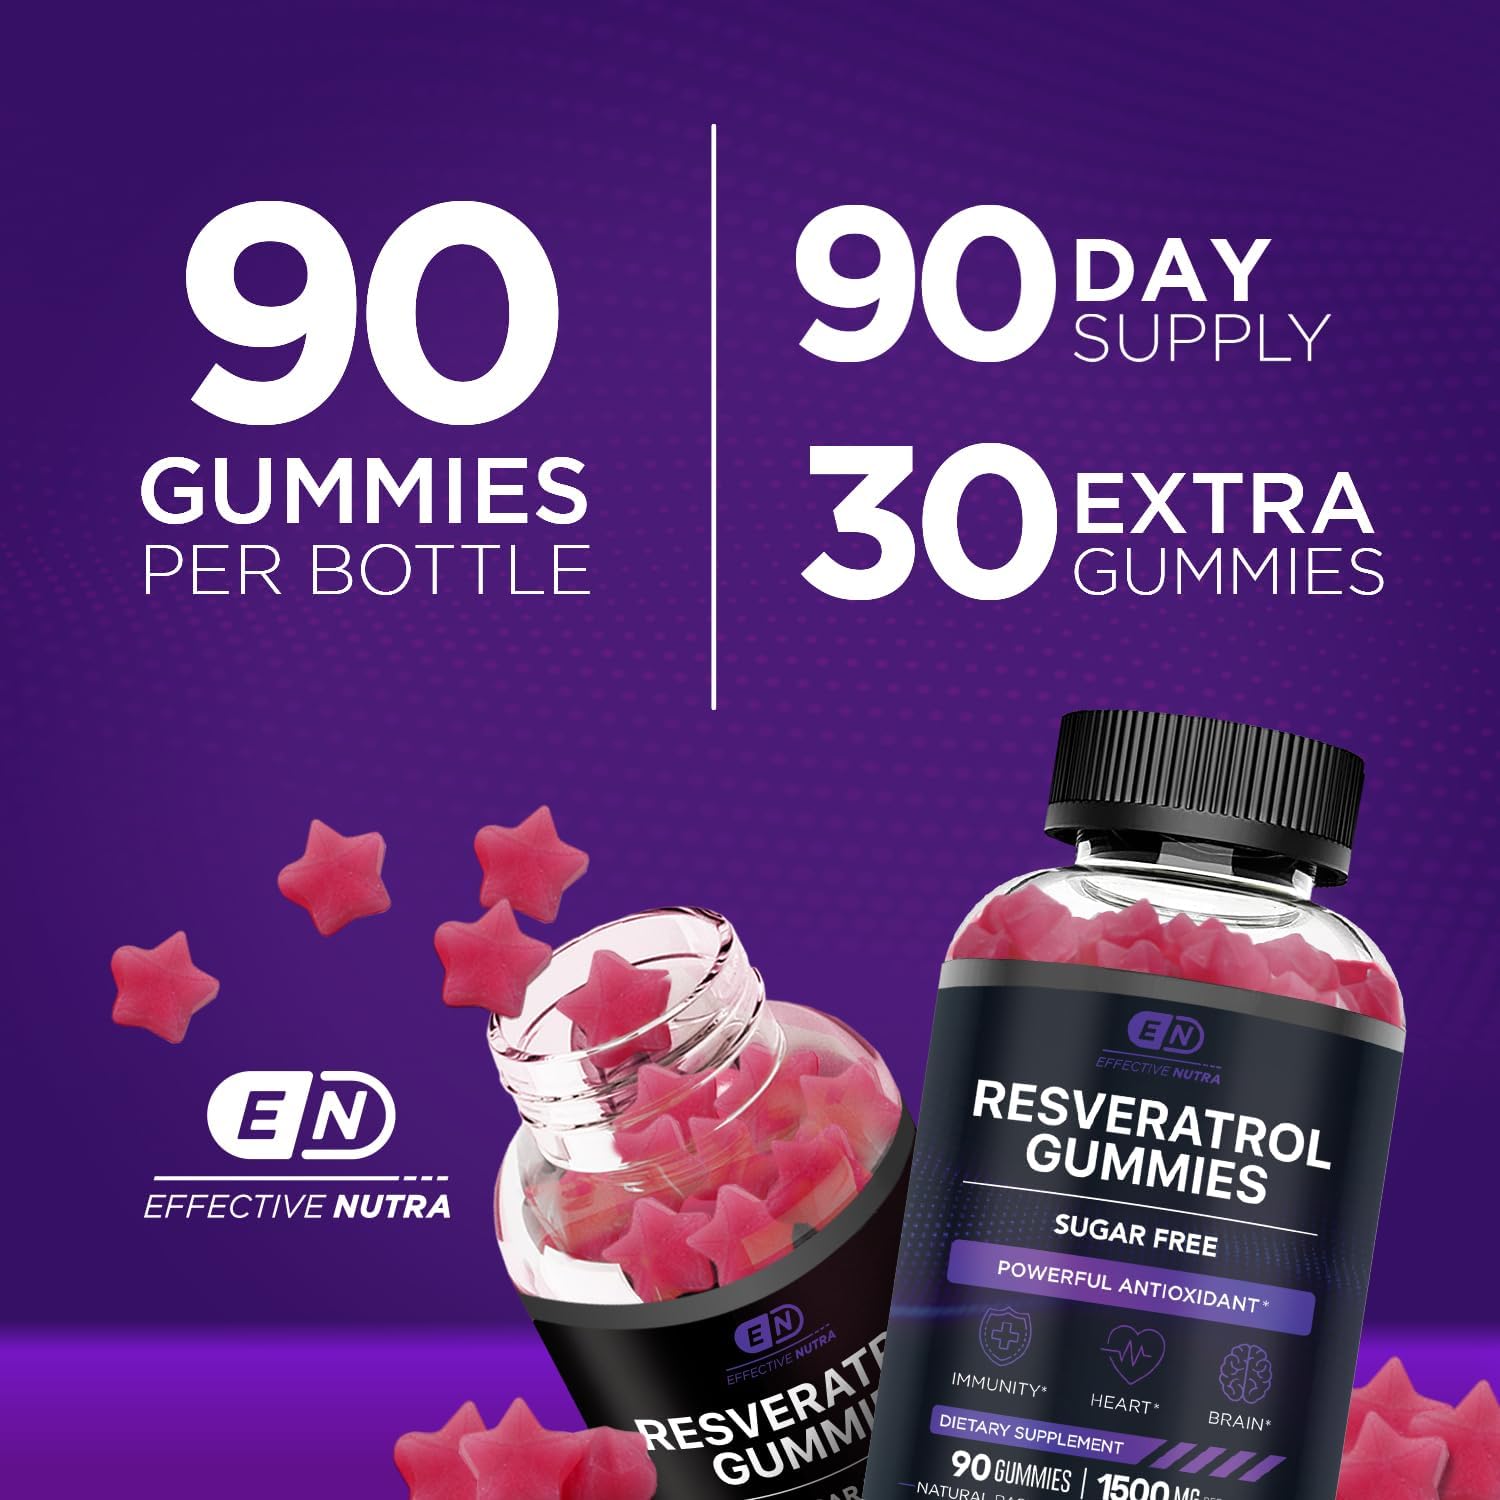 EFFECTIVE NUTRA Resveratrol Gummies 1500mg - Sugar Free Resveratrol Supplement for Antioxidant Support, Immunity, Heart Health, Brain Function - Natural Raspberry Watermelon Flavor (90 Count) : Health & Household